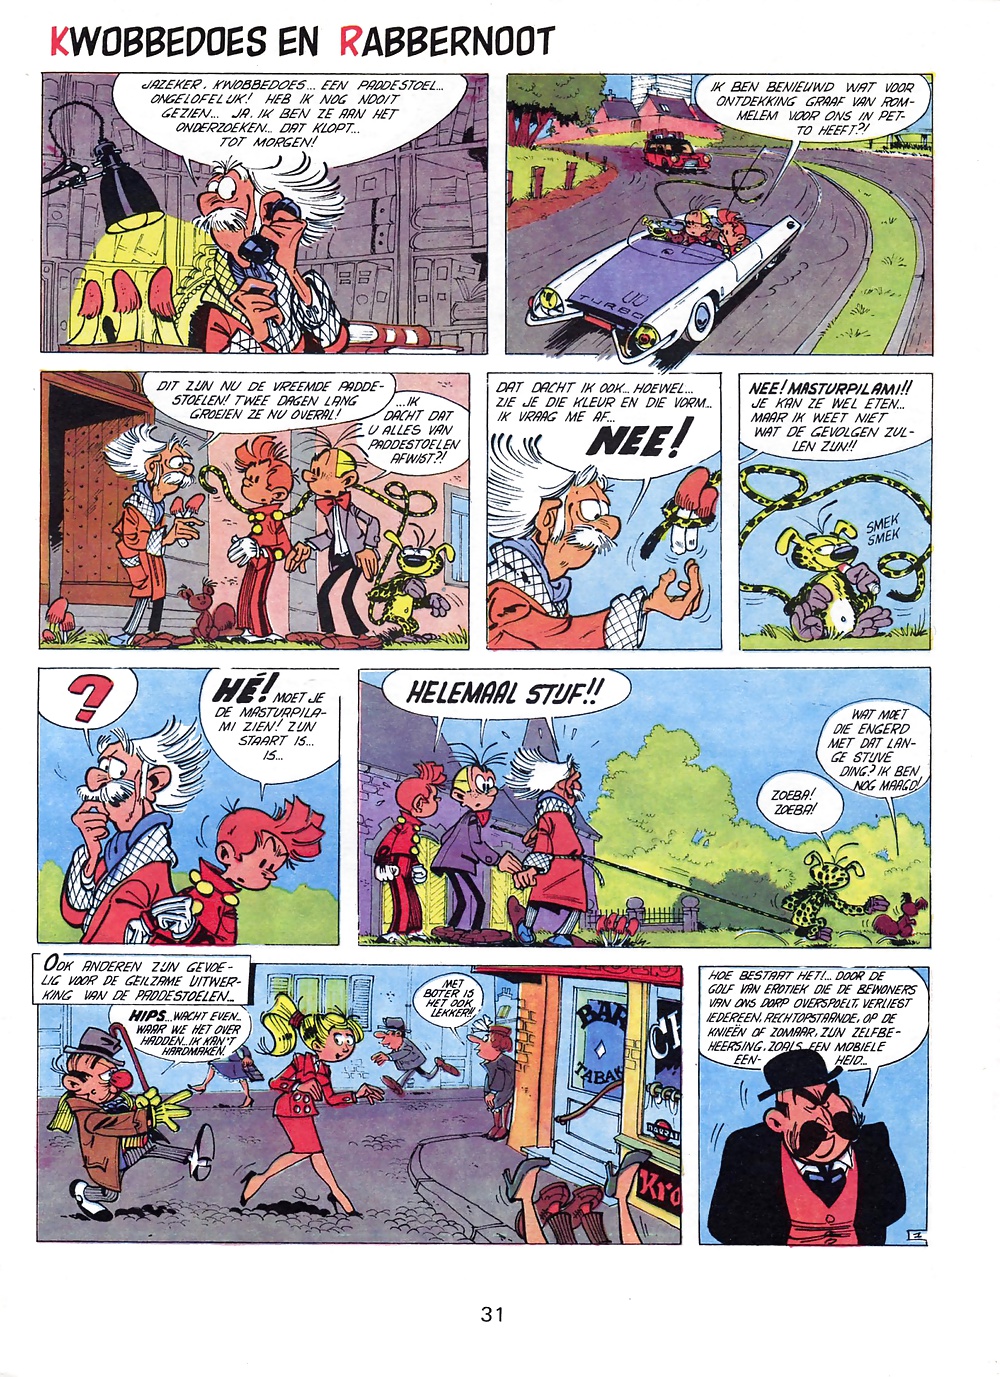 Weinlese-Comic - Strip-tease #41123162